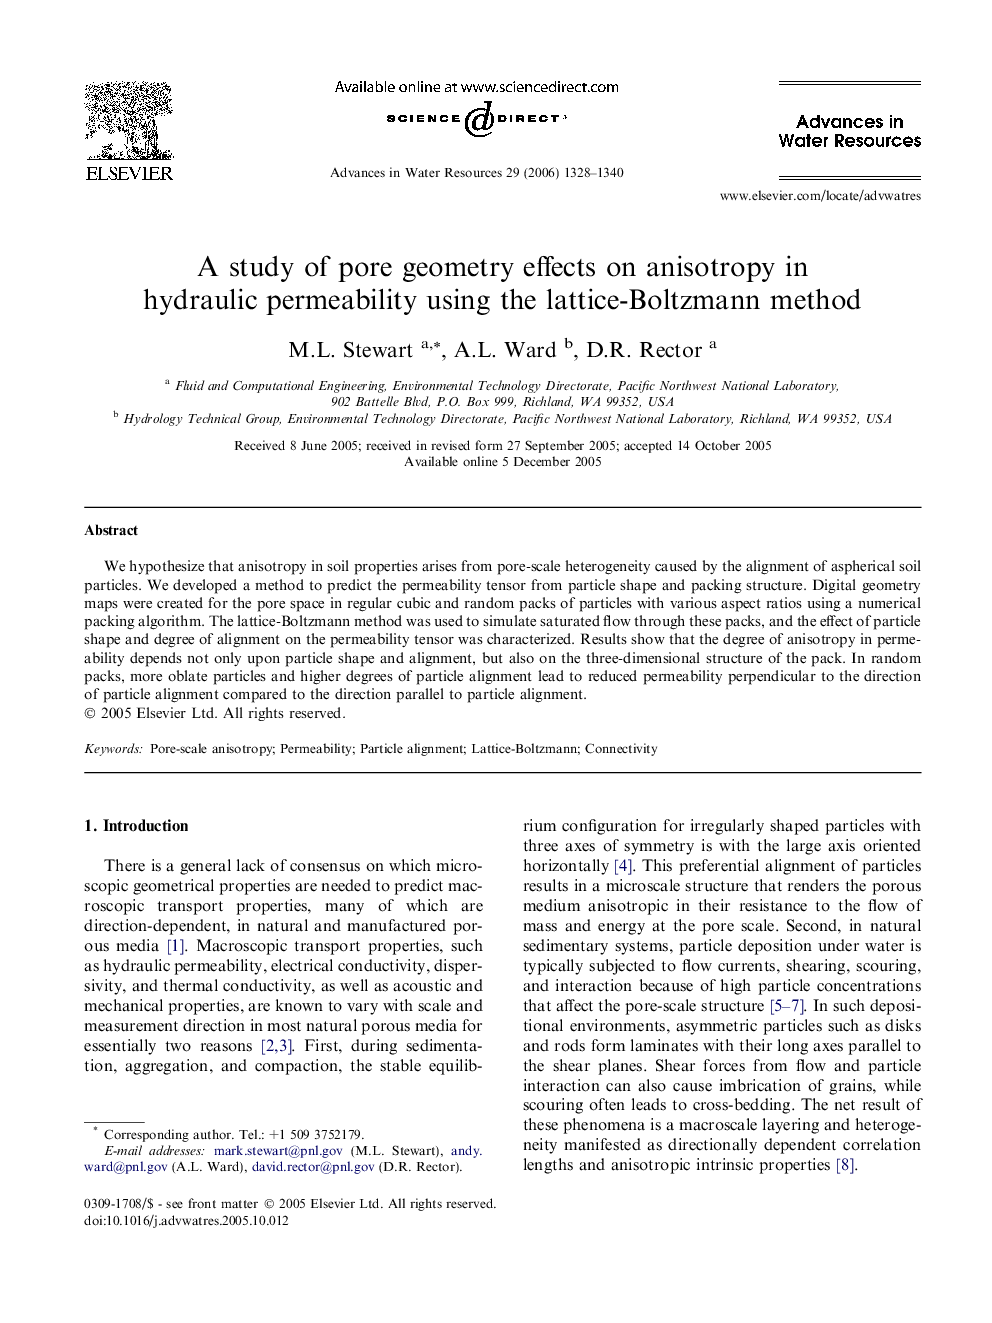 A study of pore geometry effects on anisotropy in hydraulic permeability using the lattice-Boltzmann method